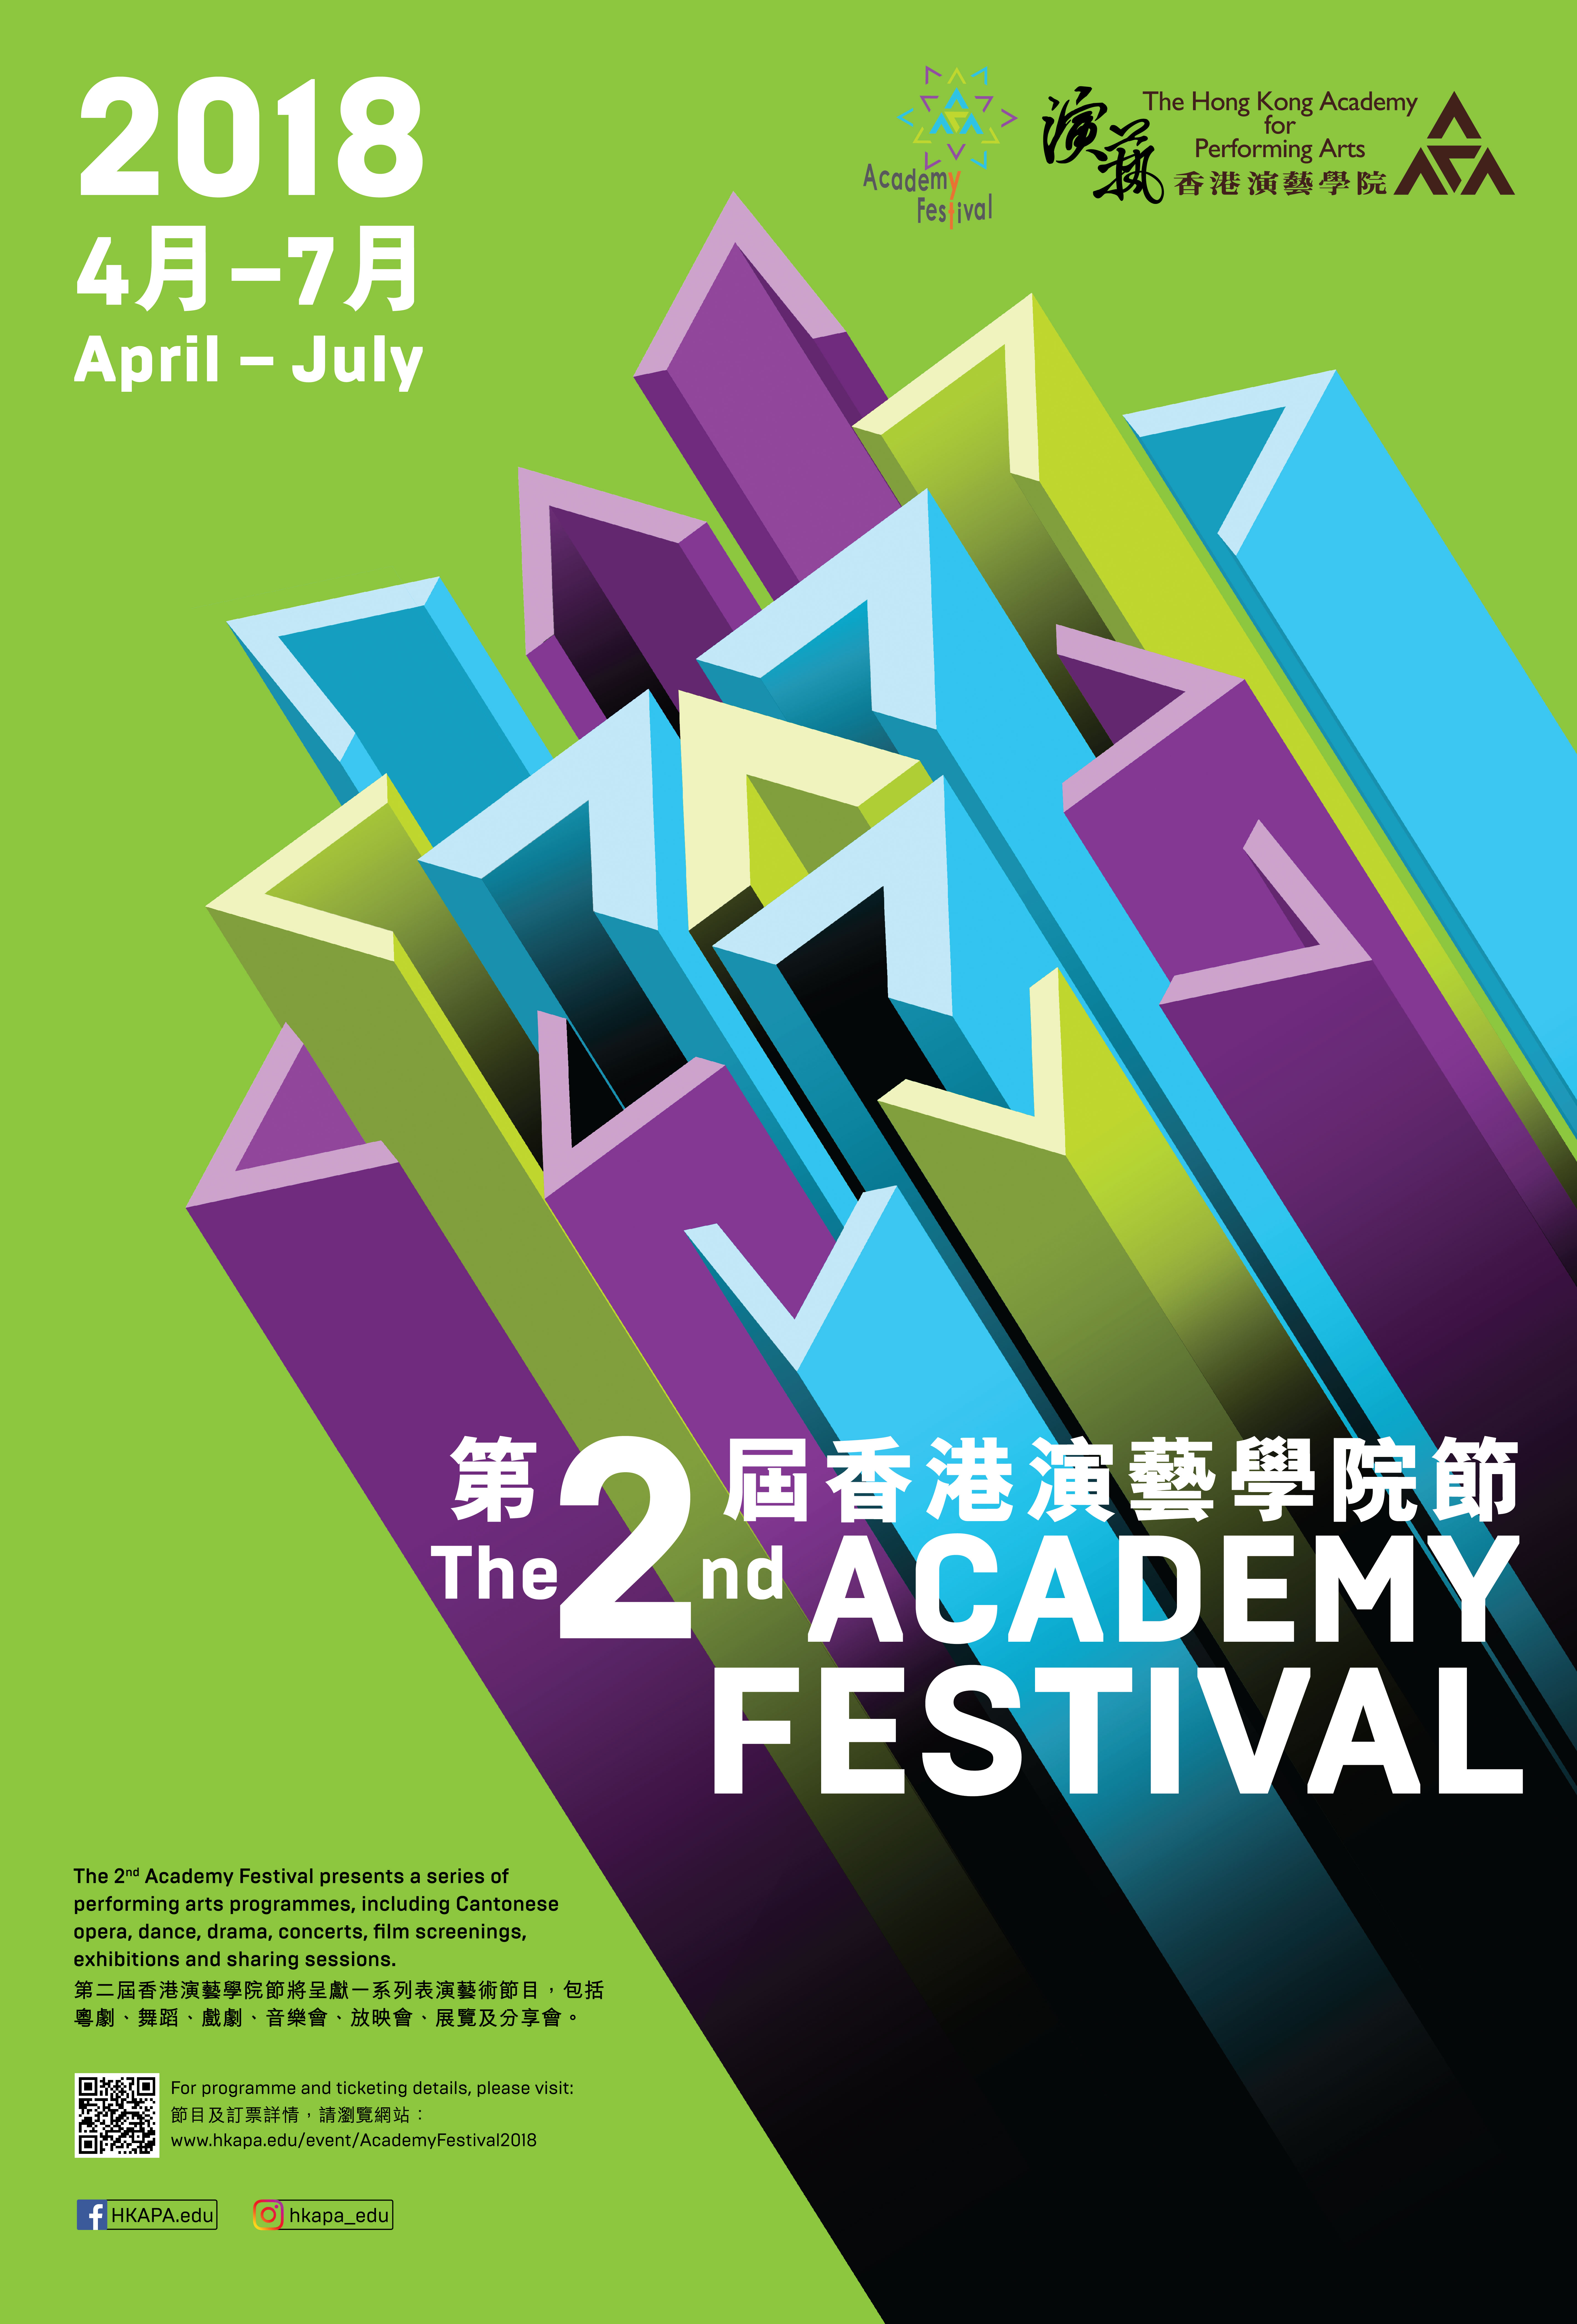 The 2nd Academy Festival